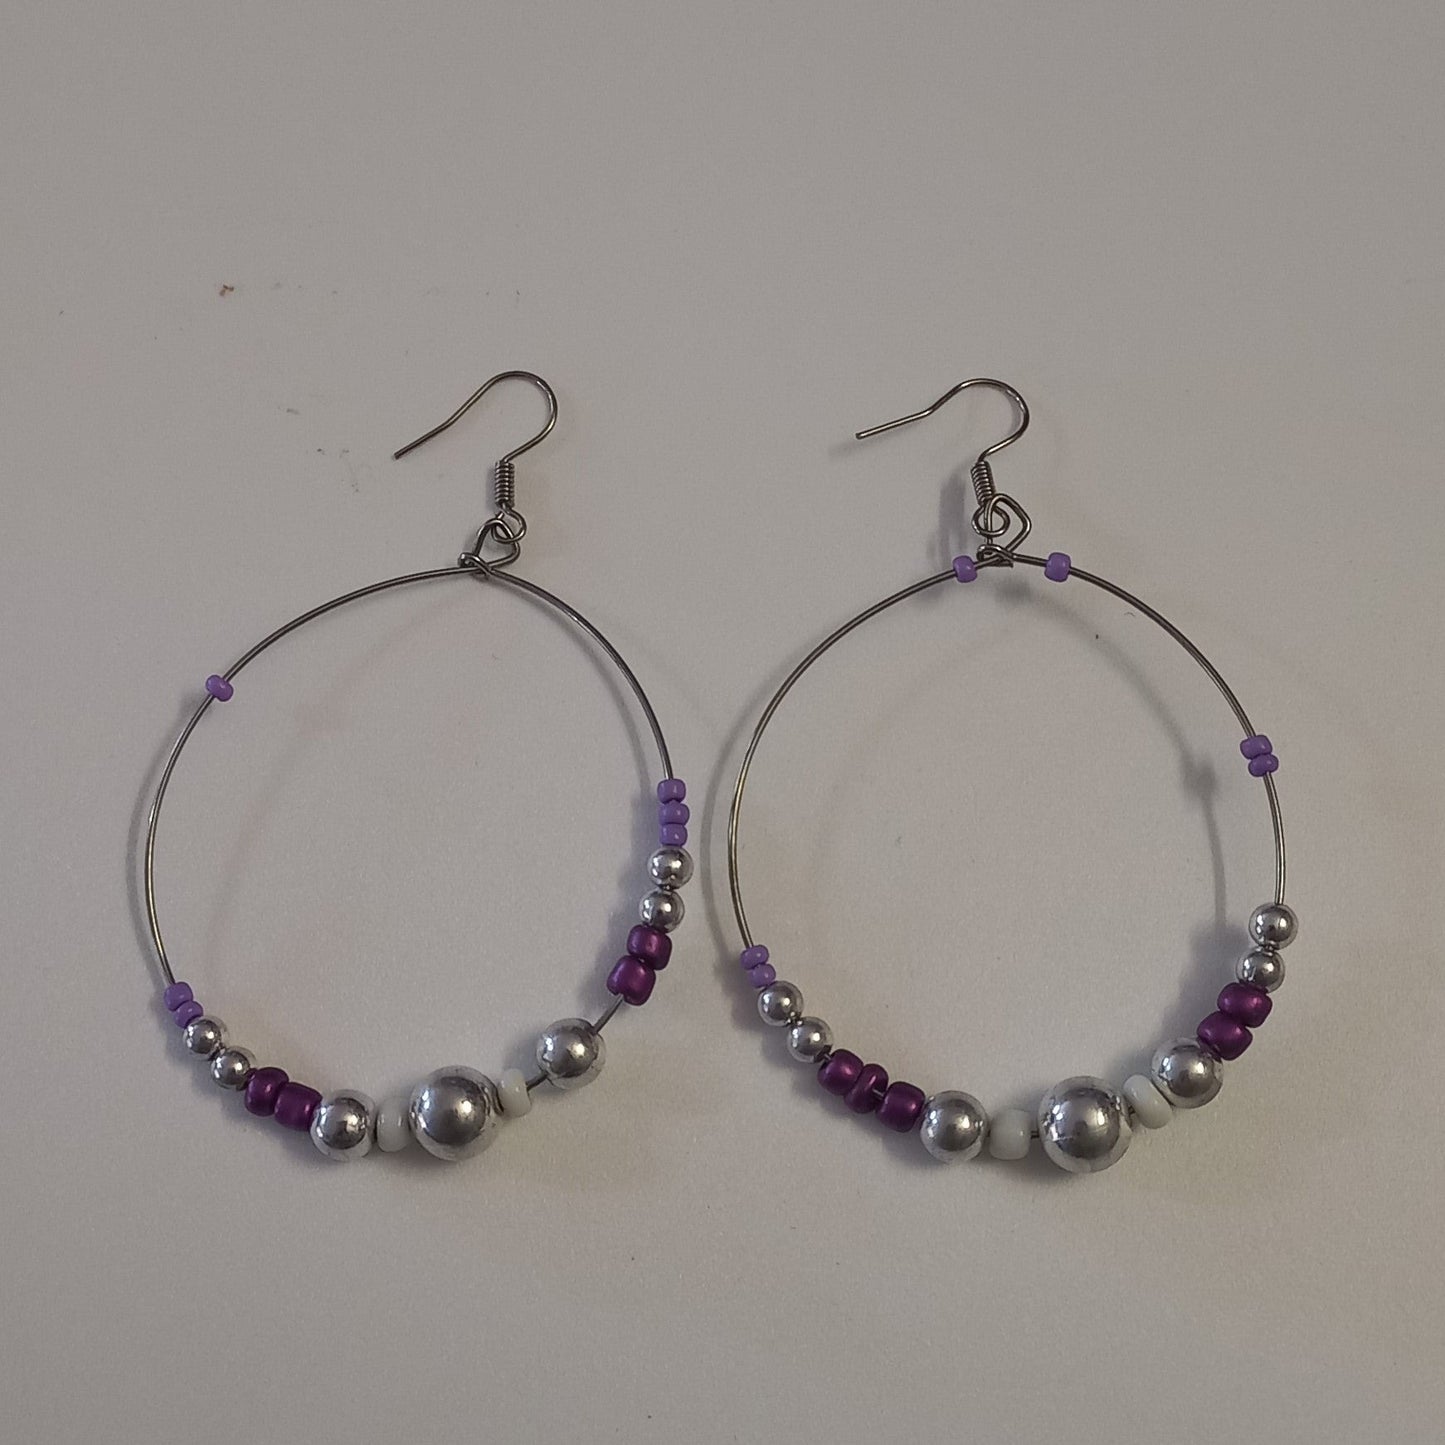 Ladies Silver Hoop Earrings with Purple and Silver Beads